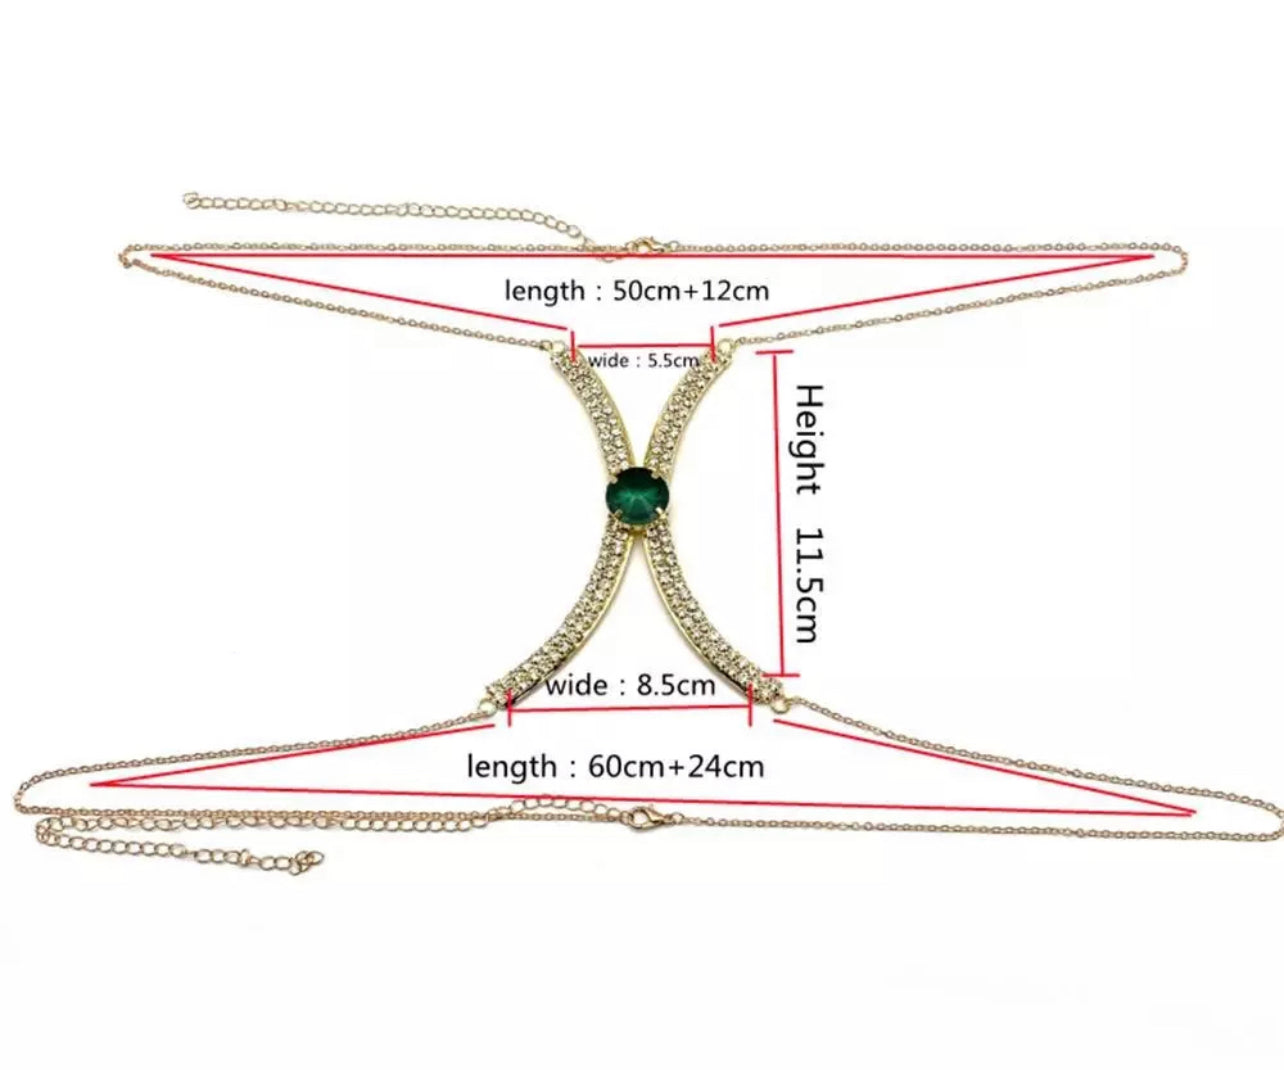 Crystal Rhinestone Centred Bra Bracket Underwear Statement Body Chain Jewellery